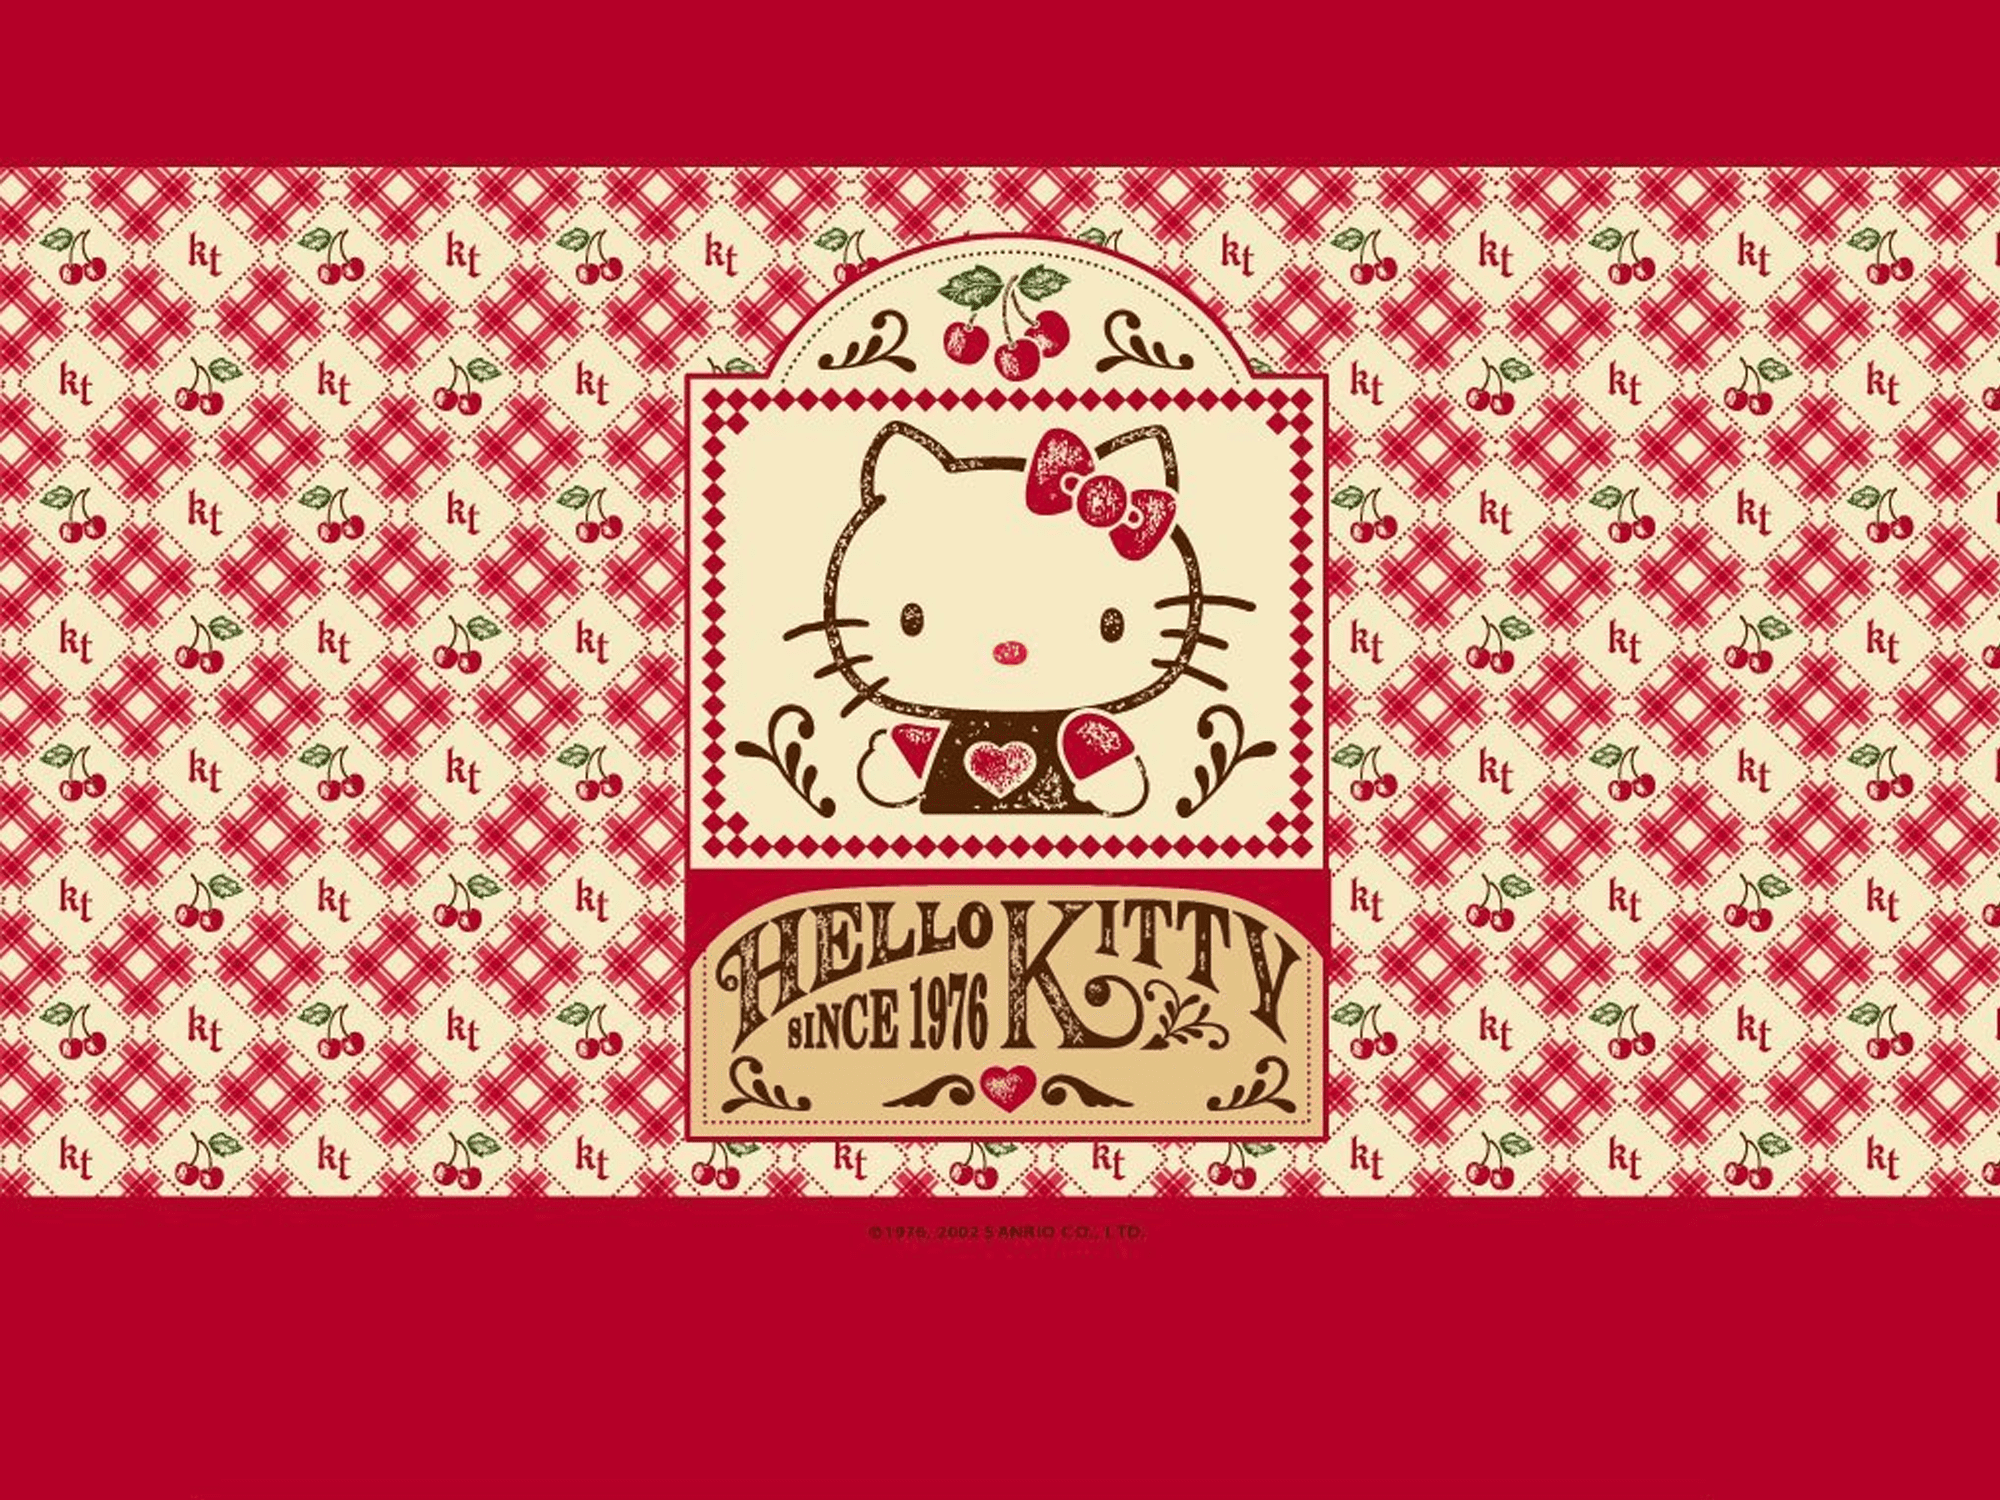 21 Cute Hello Kitty Wallpaper Ideas For Phones  I Love Hello Kitty  Idea  Wallpapers  iPhone WallpapersColor Schemes